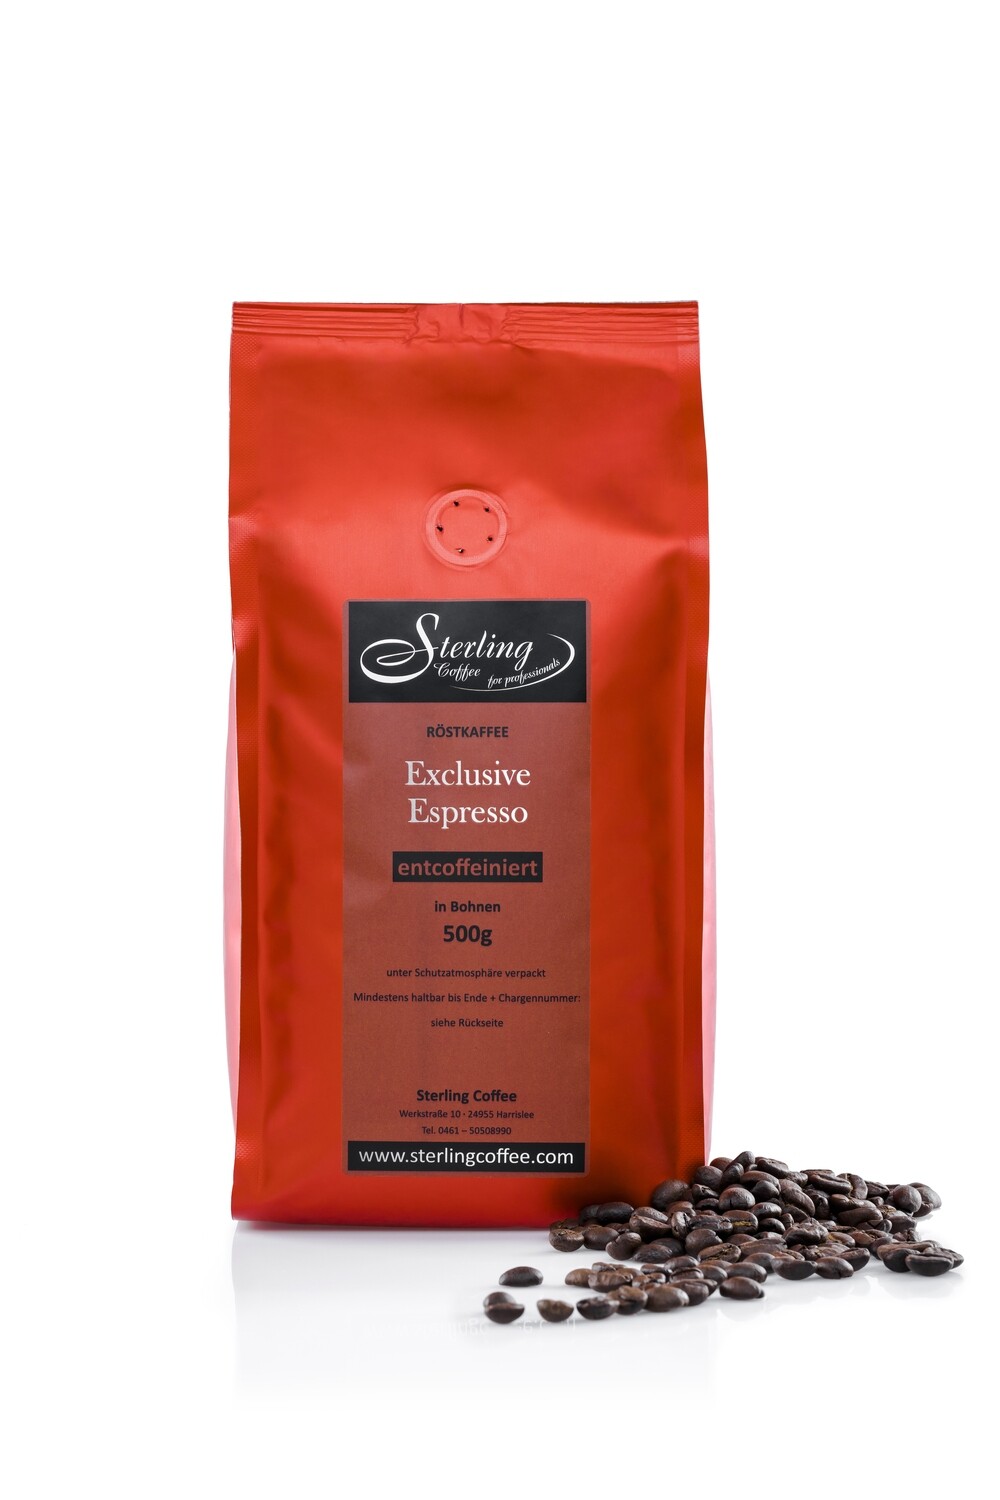 Sterling Coffee Exclusive Espresso, entcoffeiniert
ganze Bohne, 500g